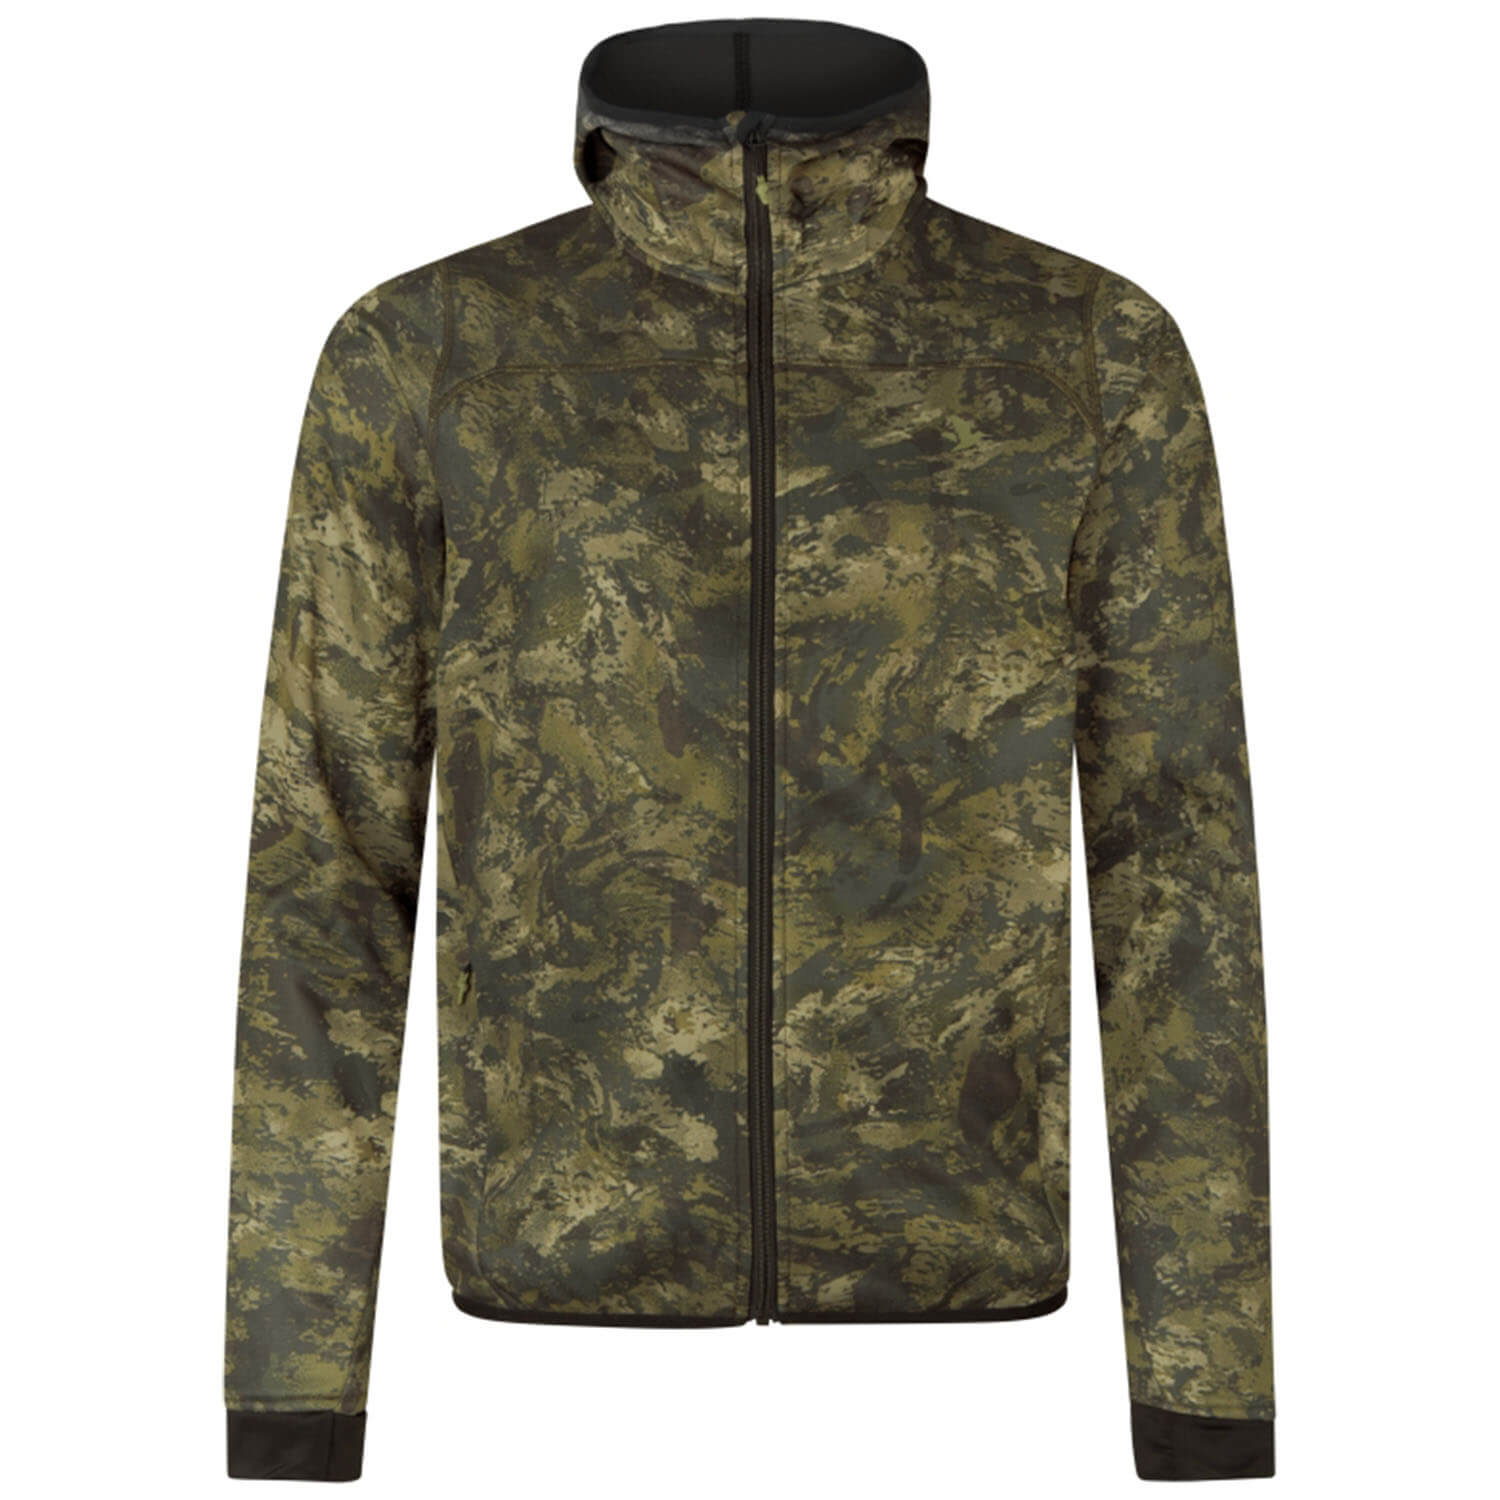 Seeland fleece jacket power camo (InVis green)